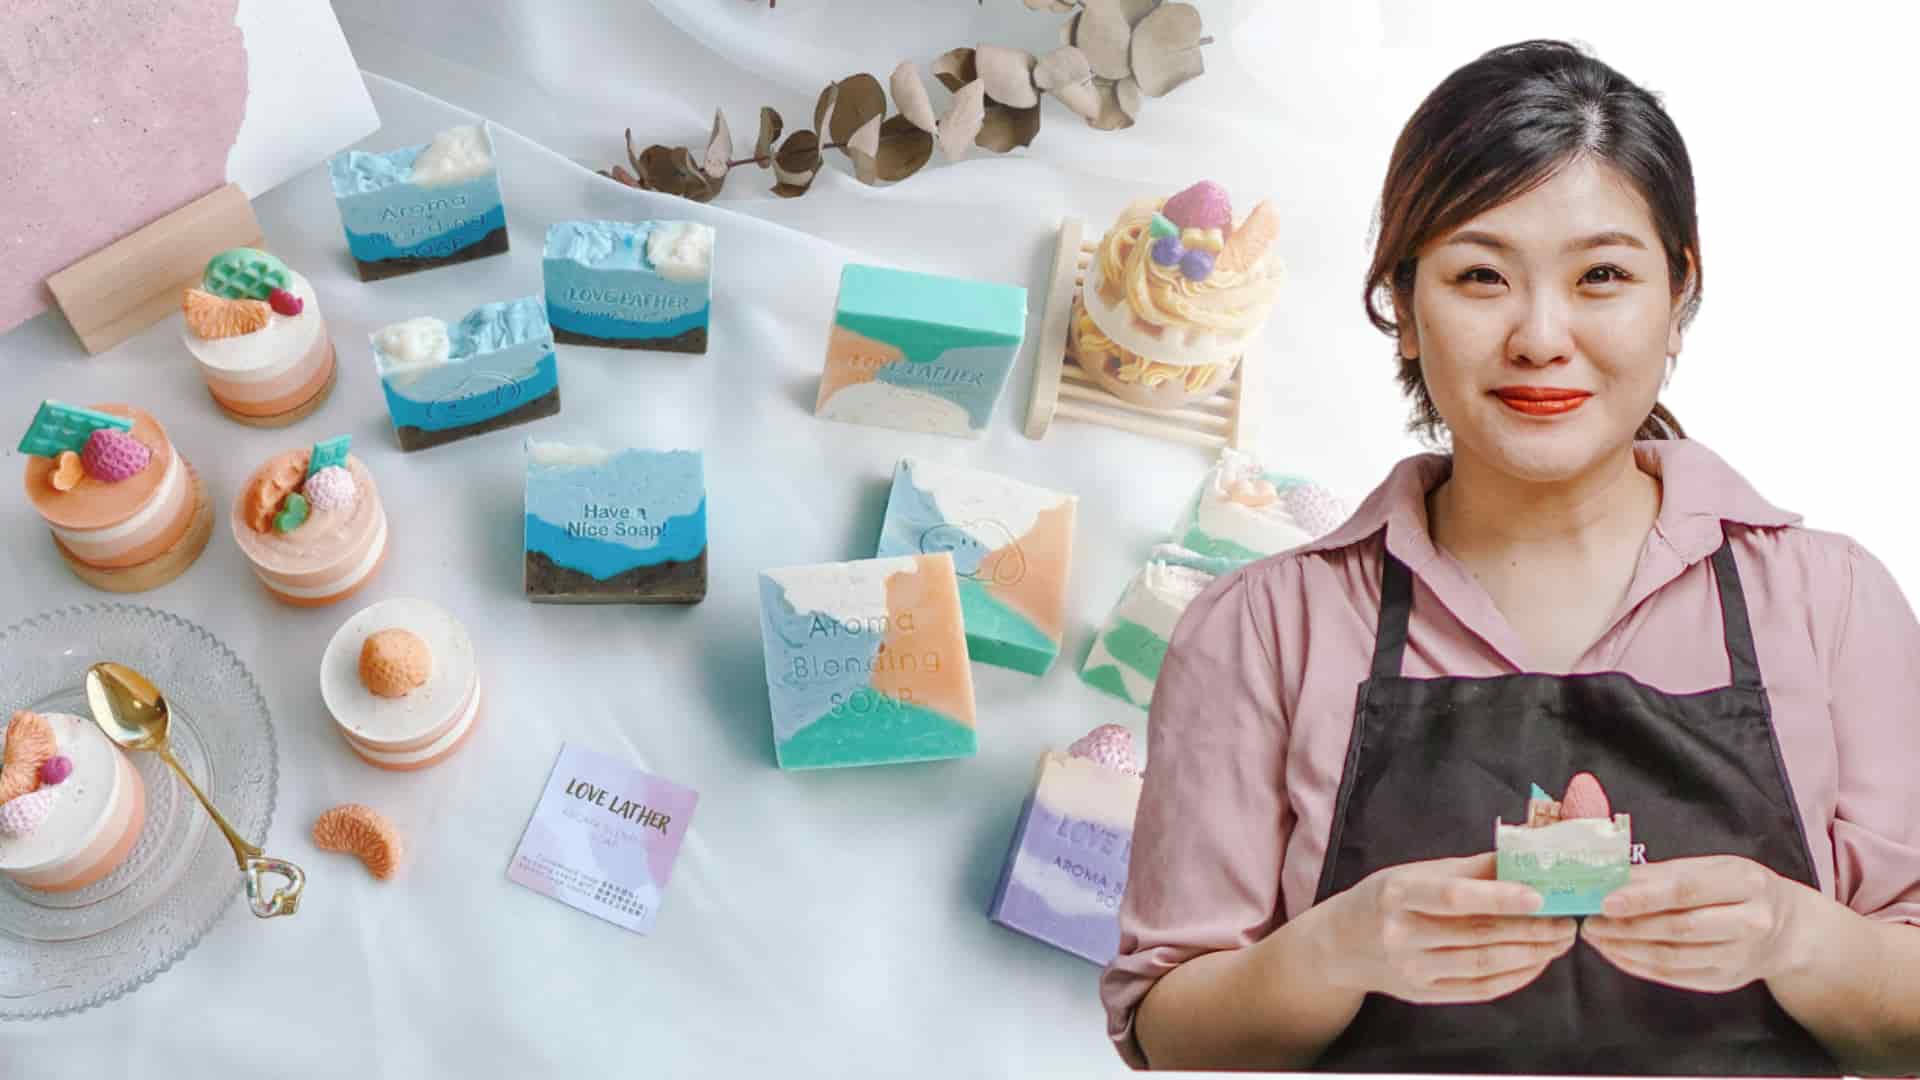 教你从零手作「韩式绝美造型皂」发挥美学和创意！ / Cold Pressed Korean Style DIY Soap Making For Beginners